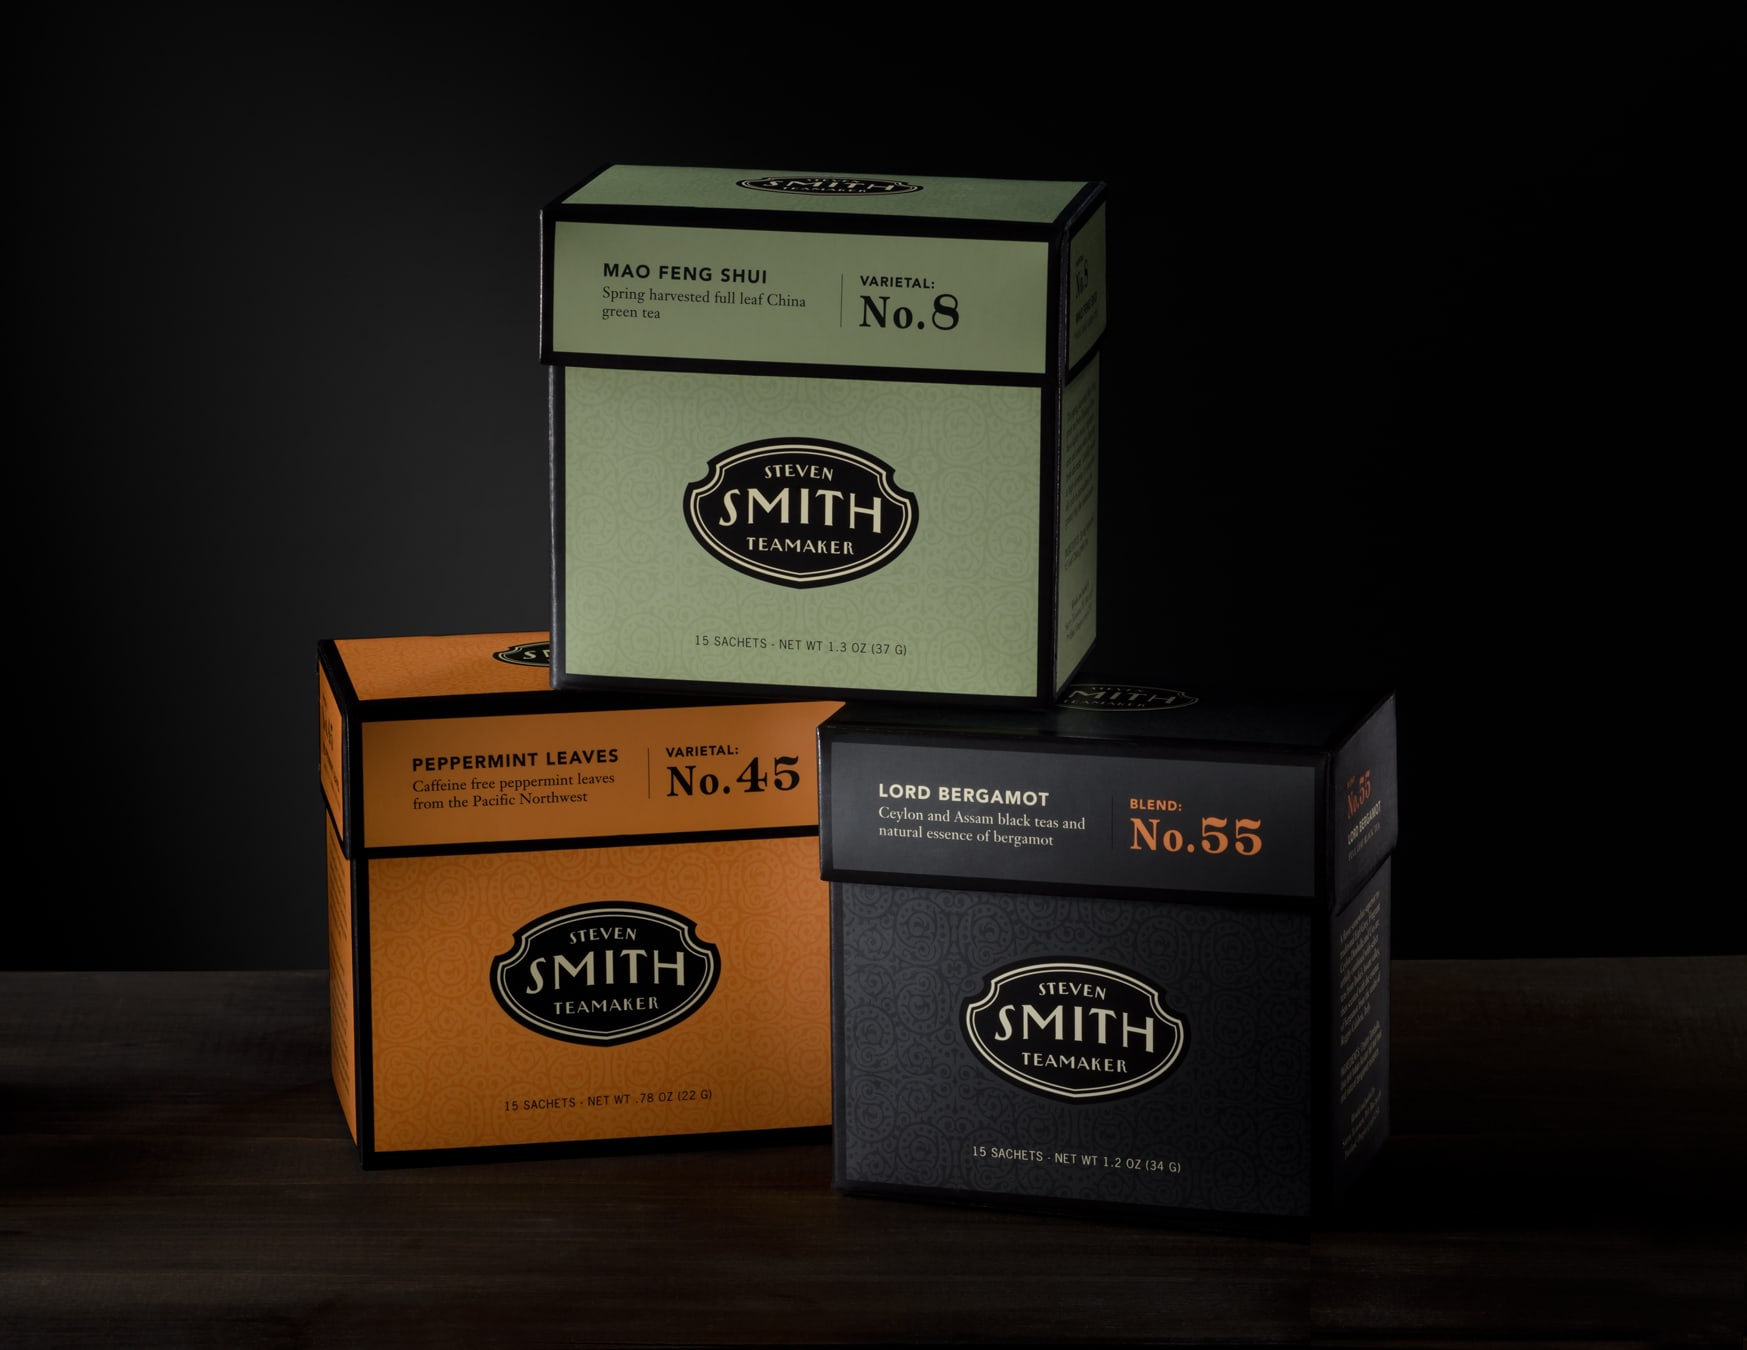 Steven Smith Teamaker tea packaging design tip top box